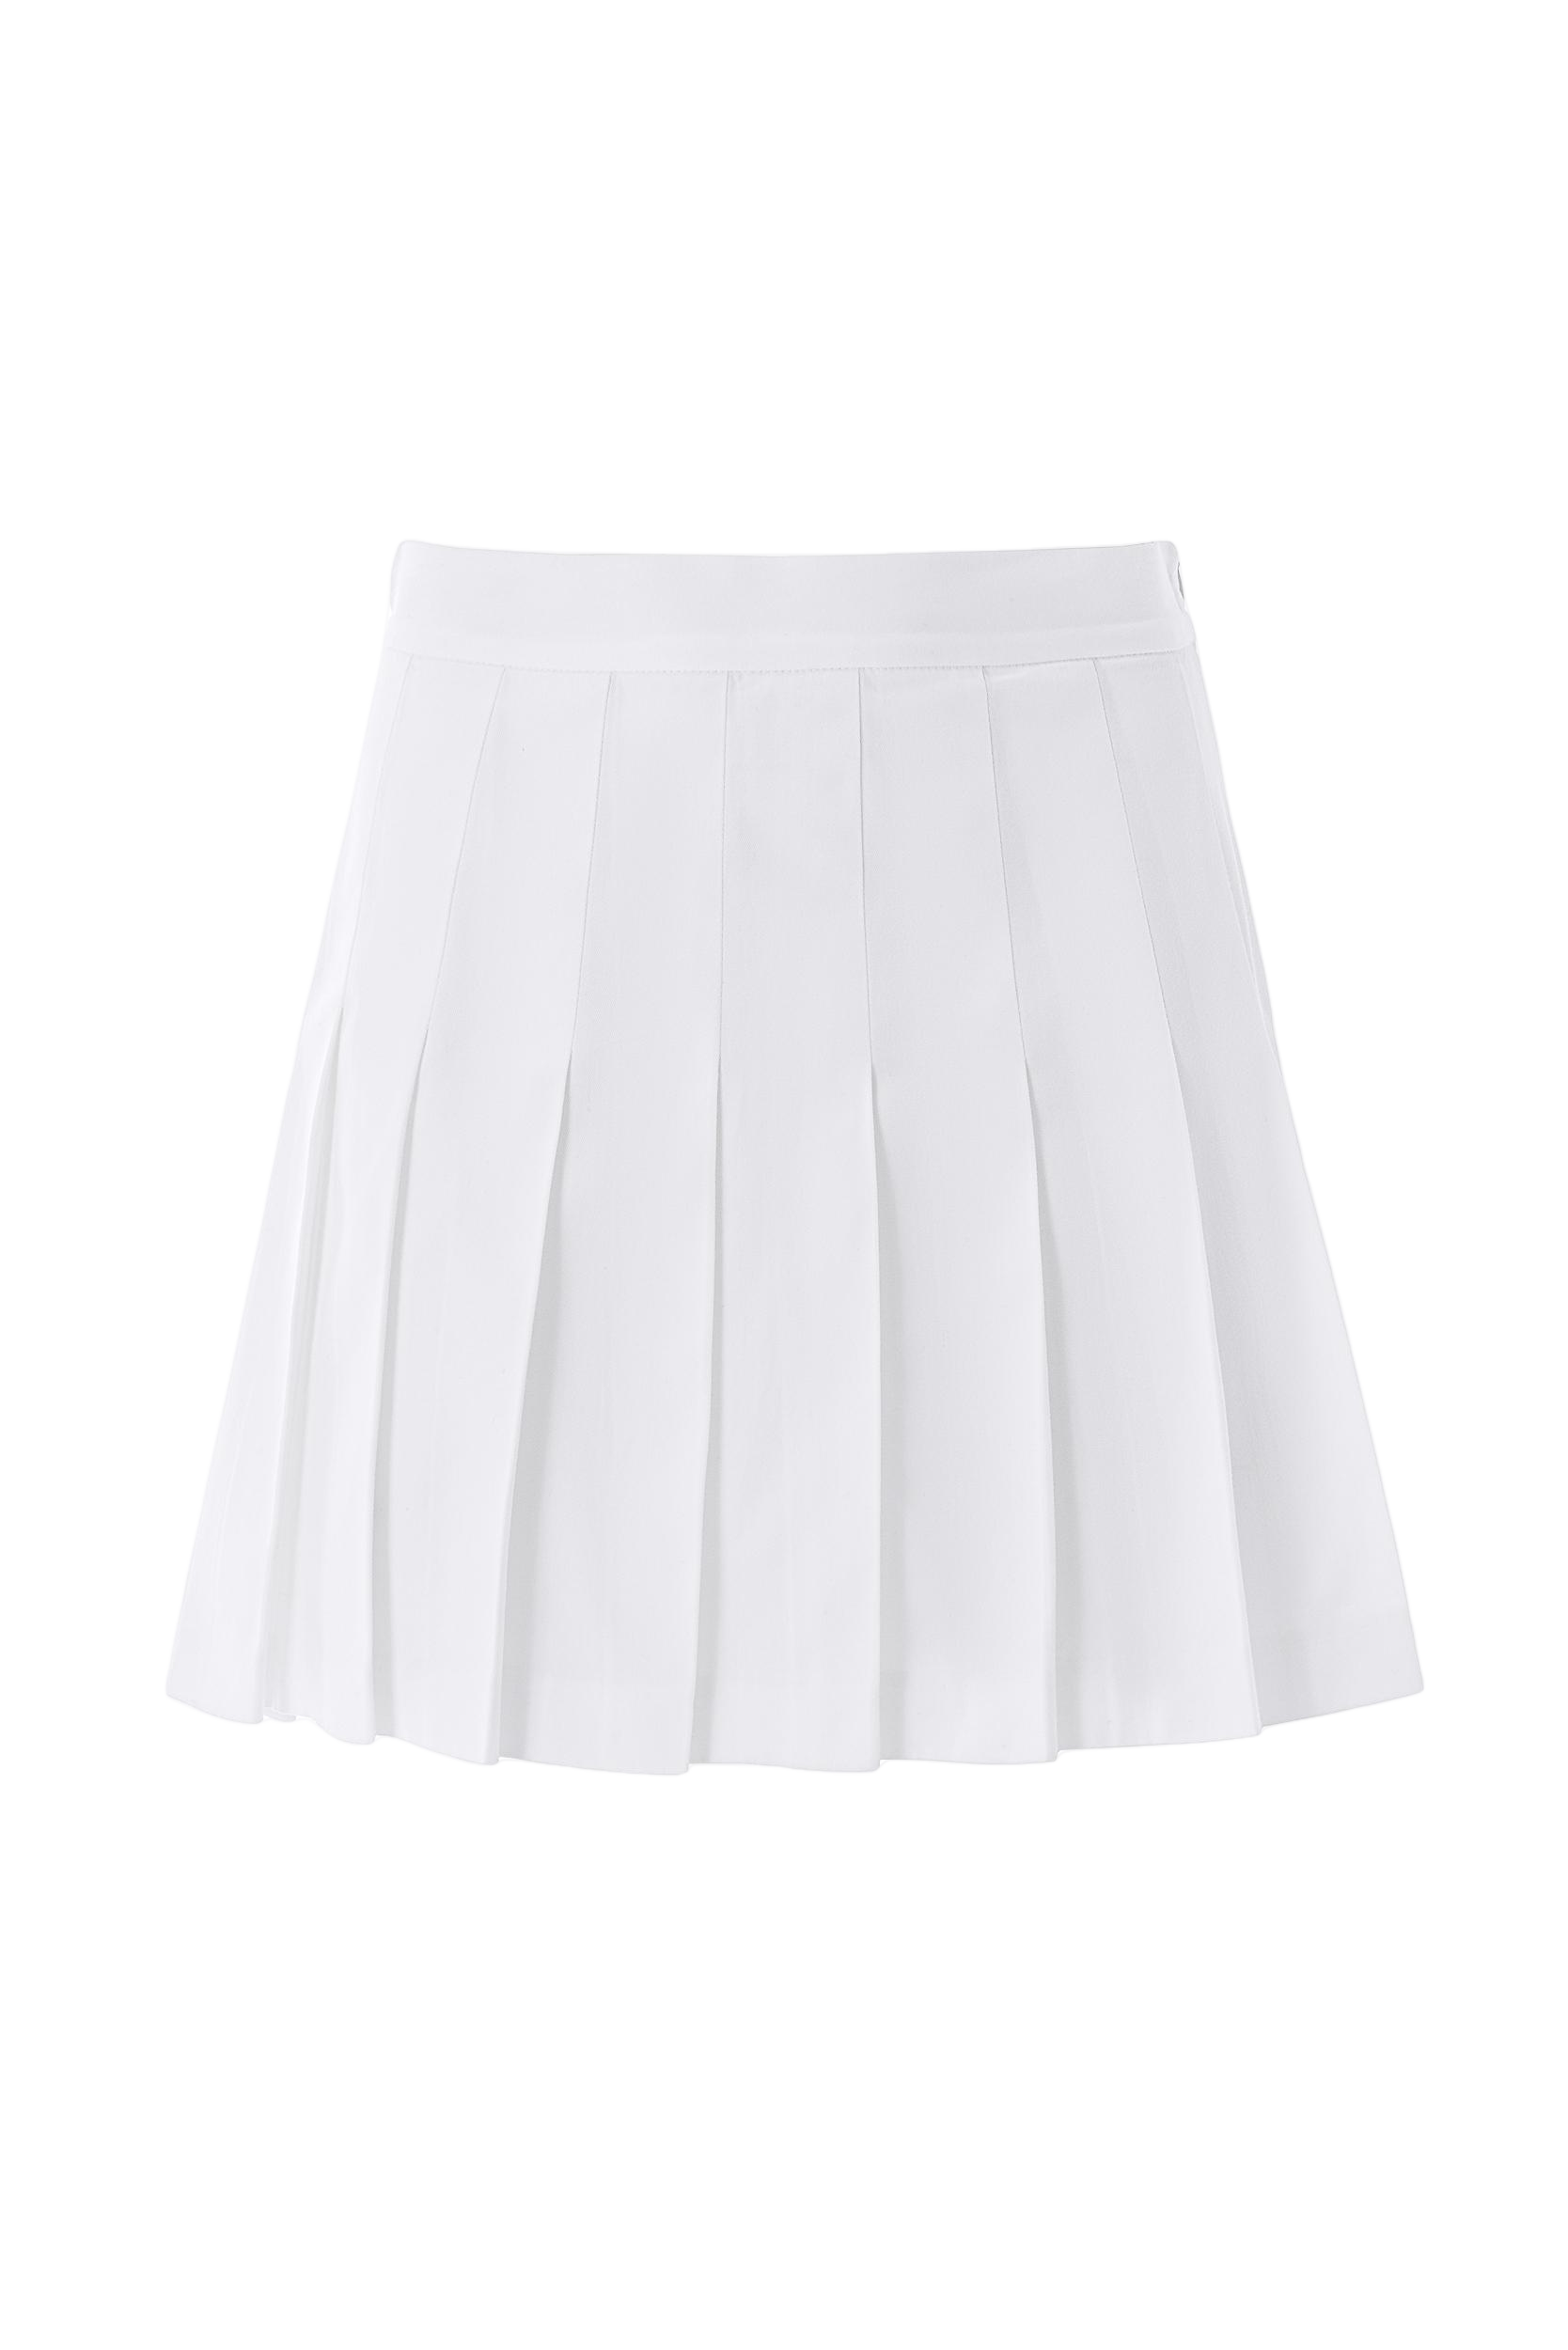 Lita Couture Pleated Tennis Skirt